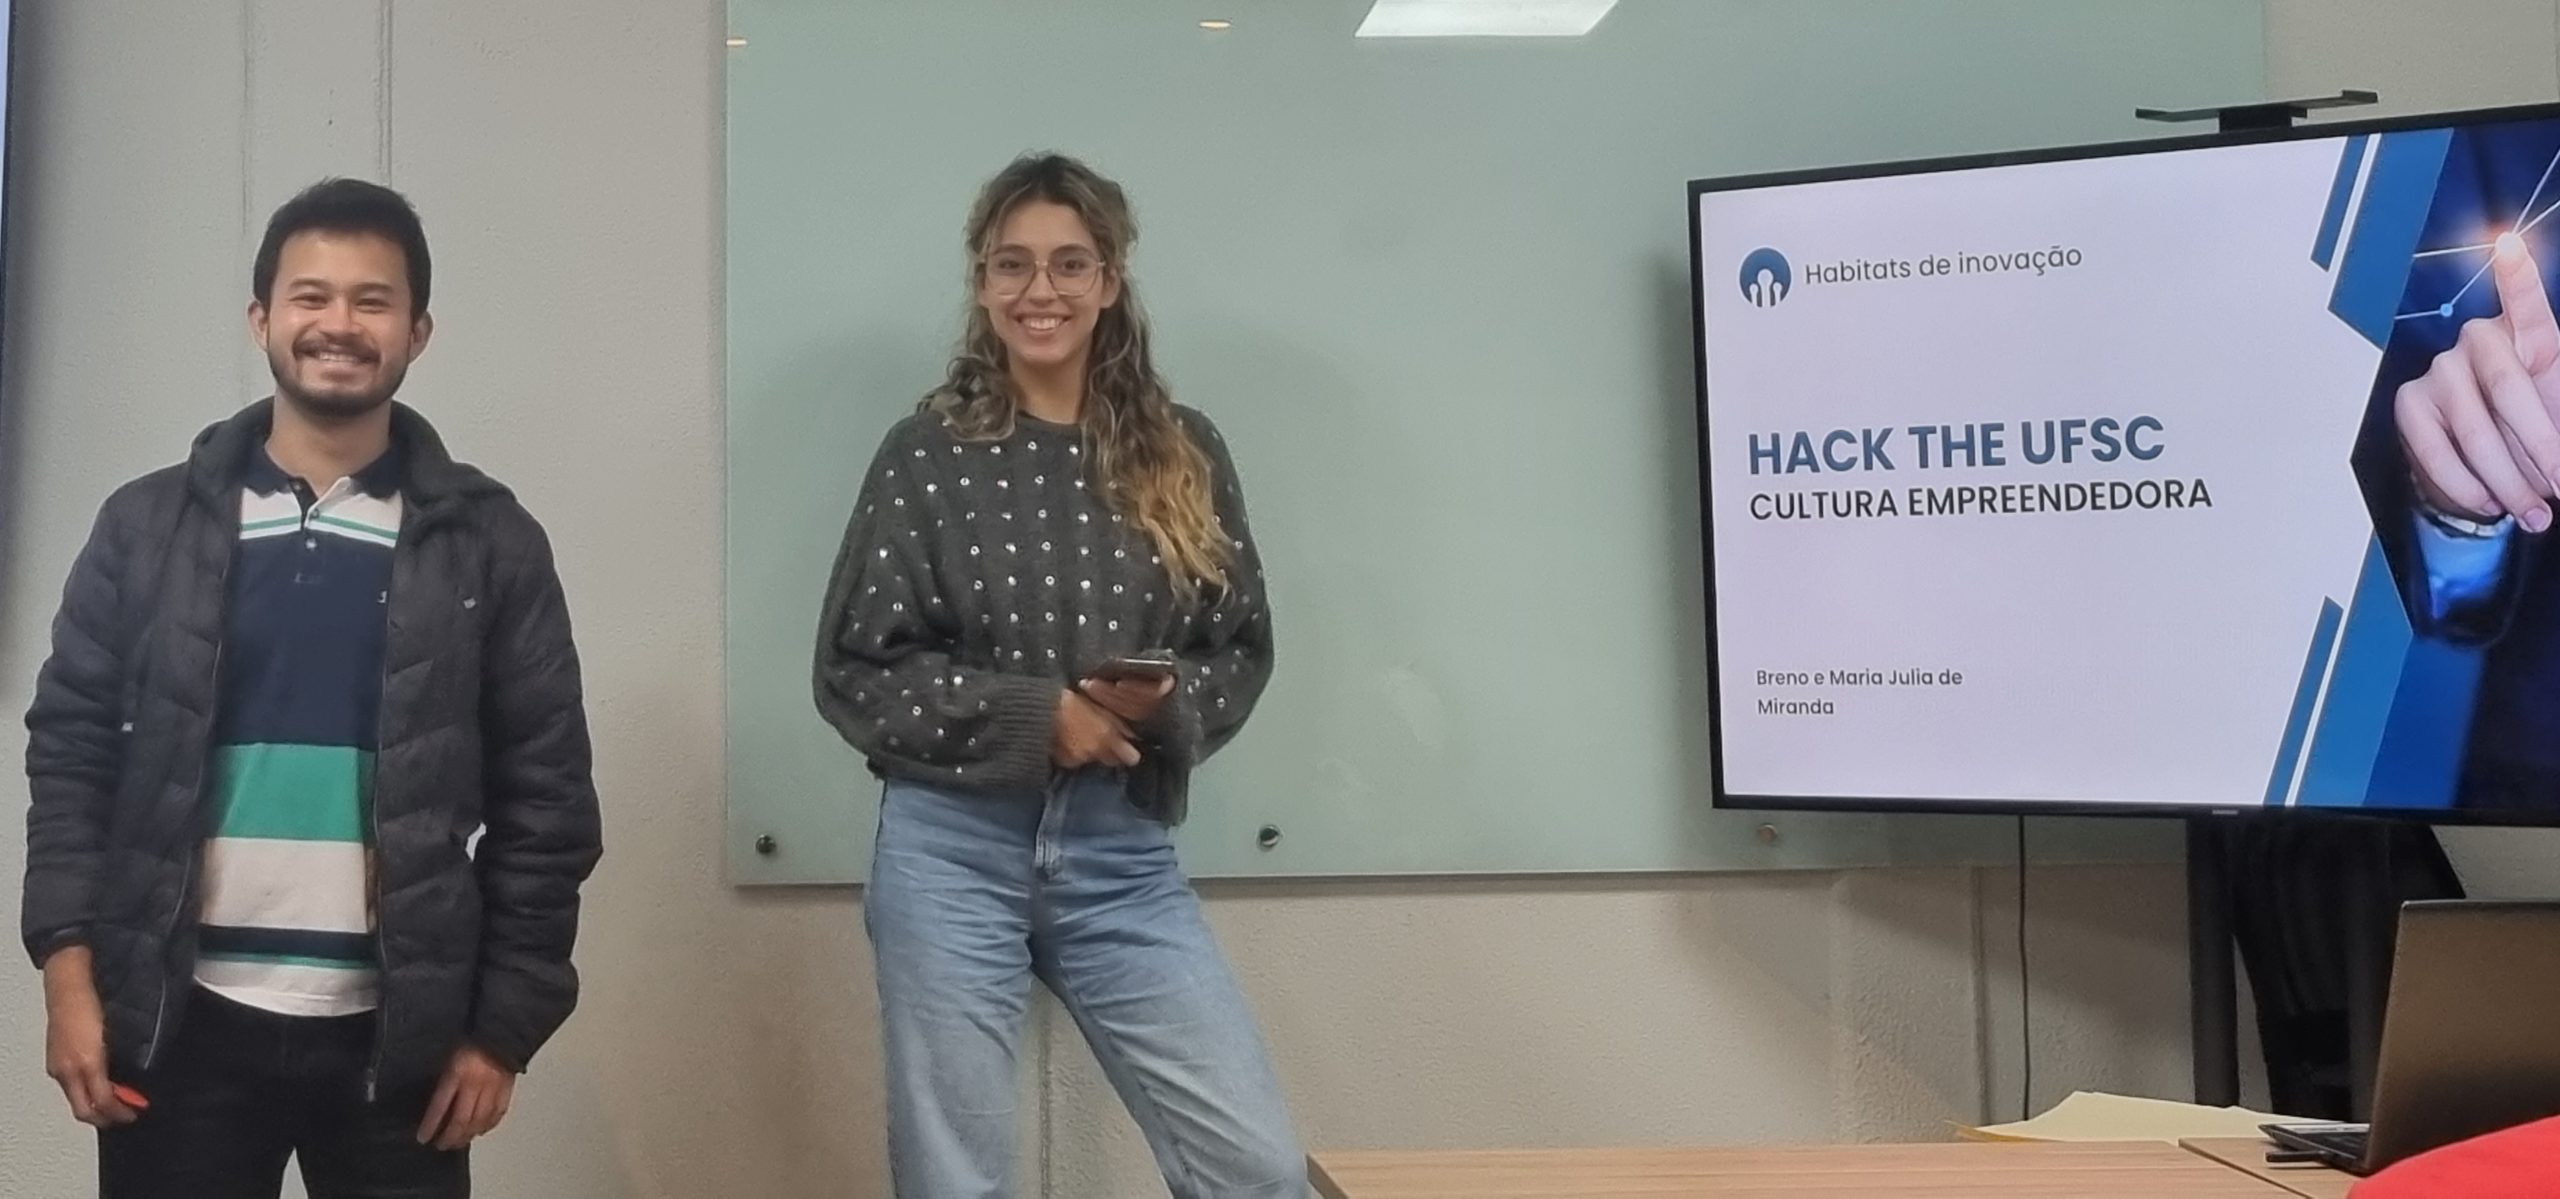 Pitch Hack the UFSC - Cultura empreendedora